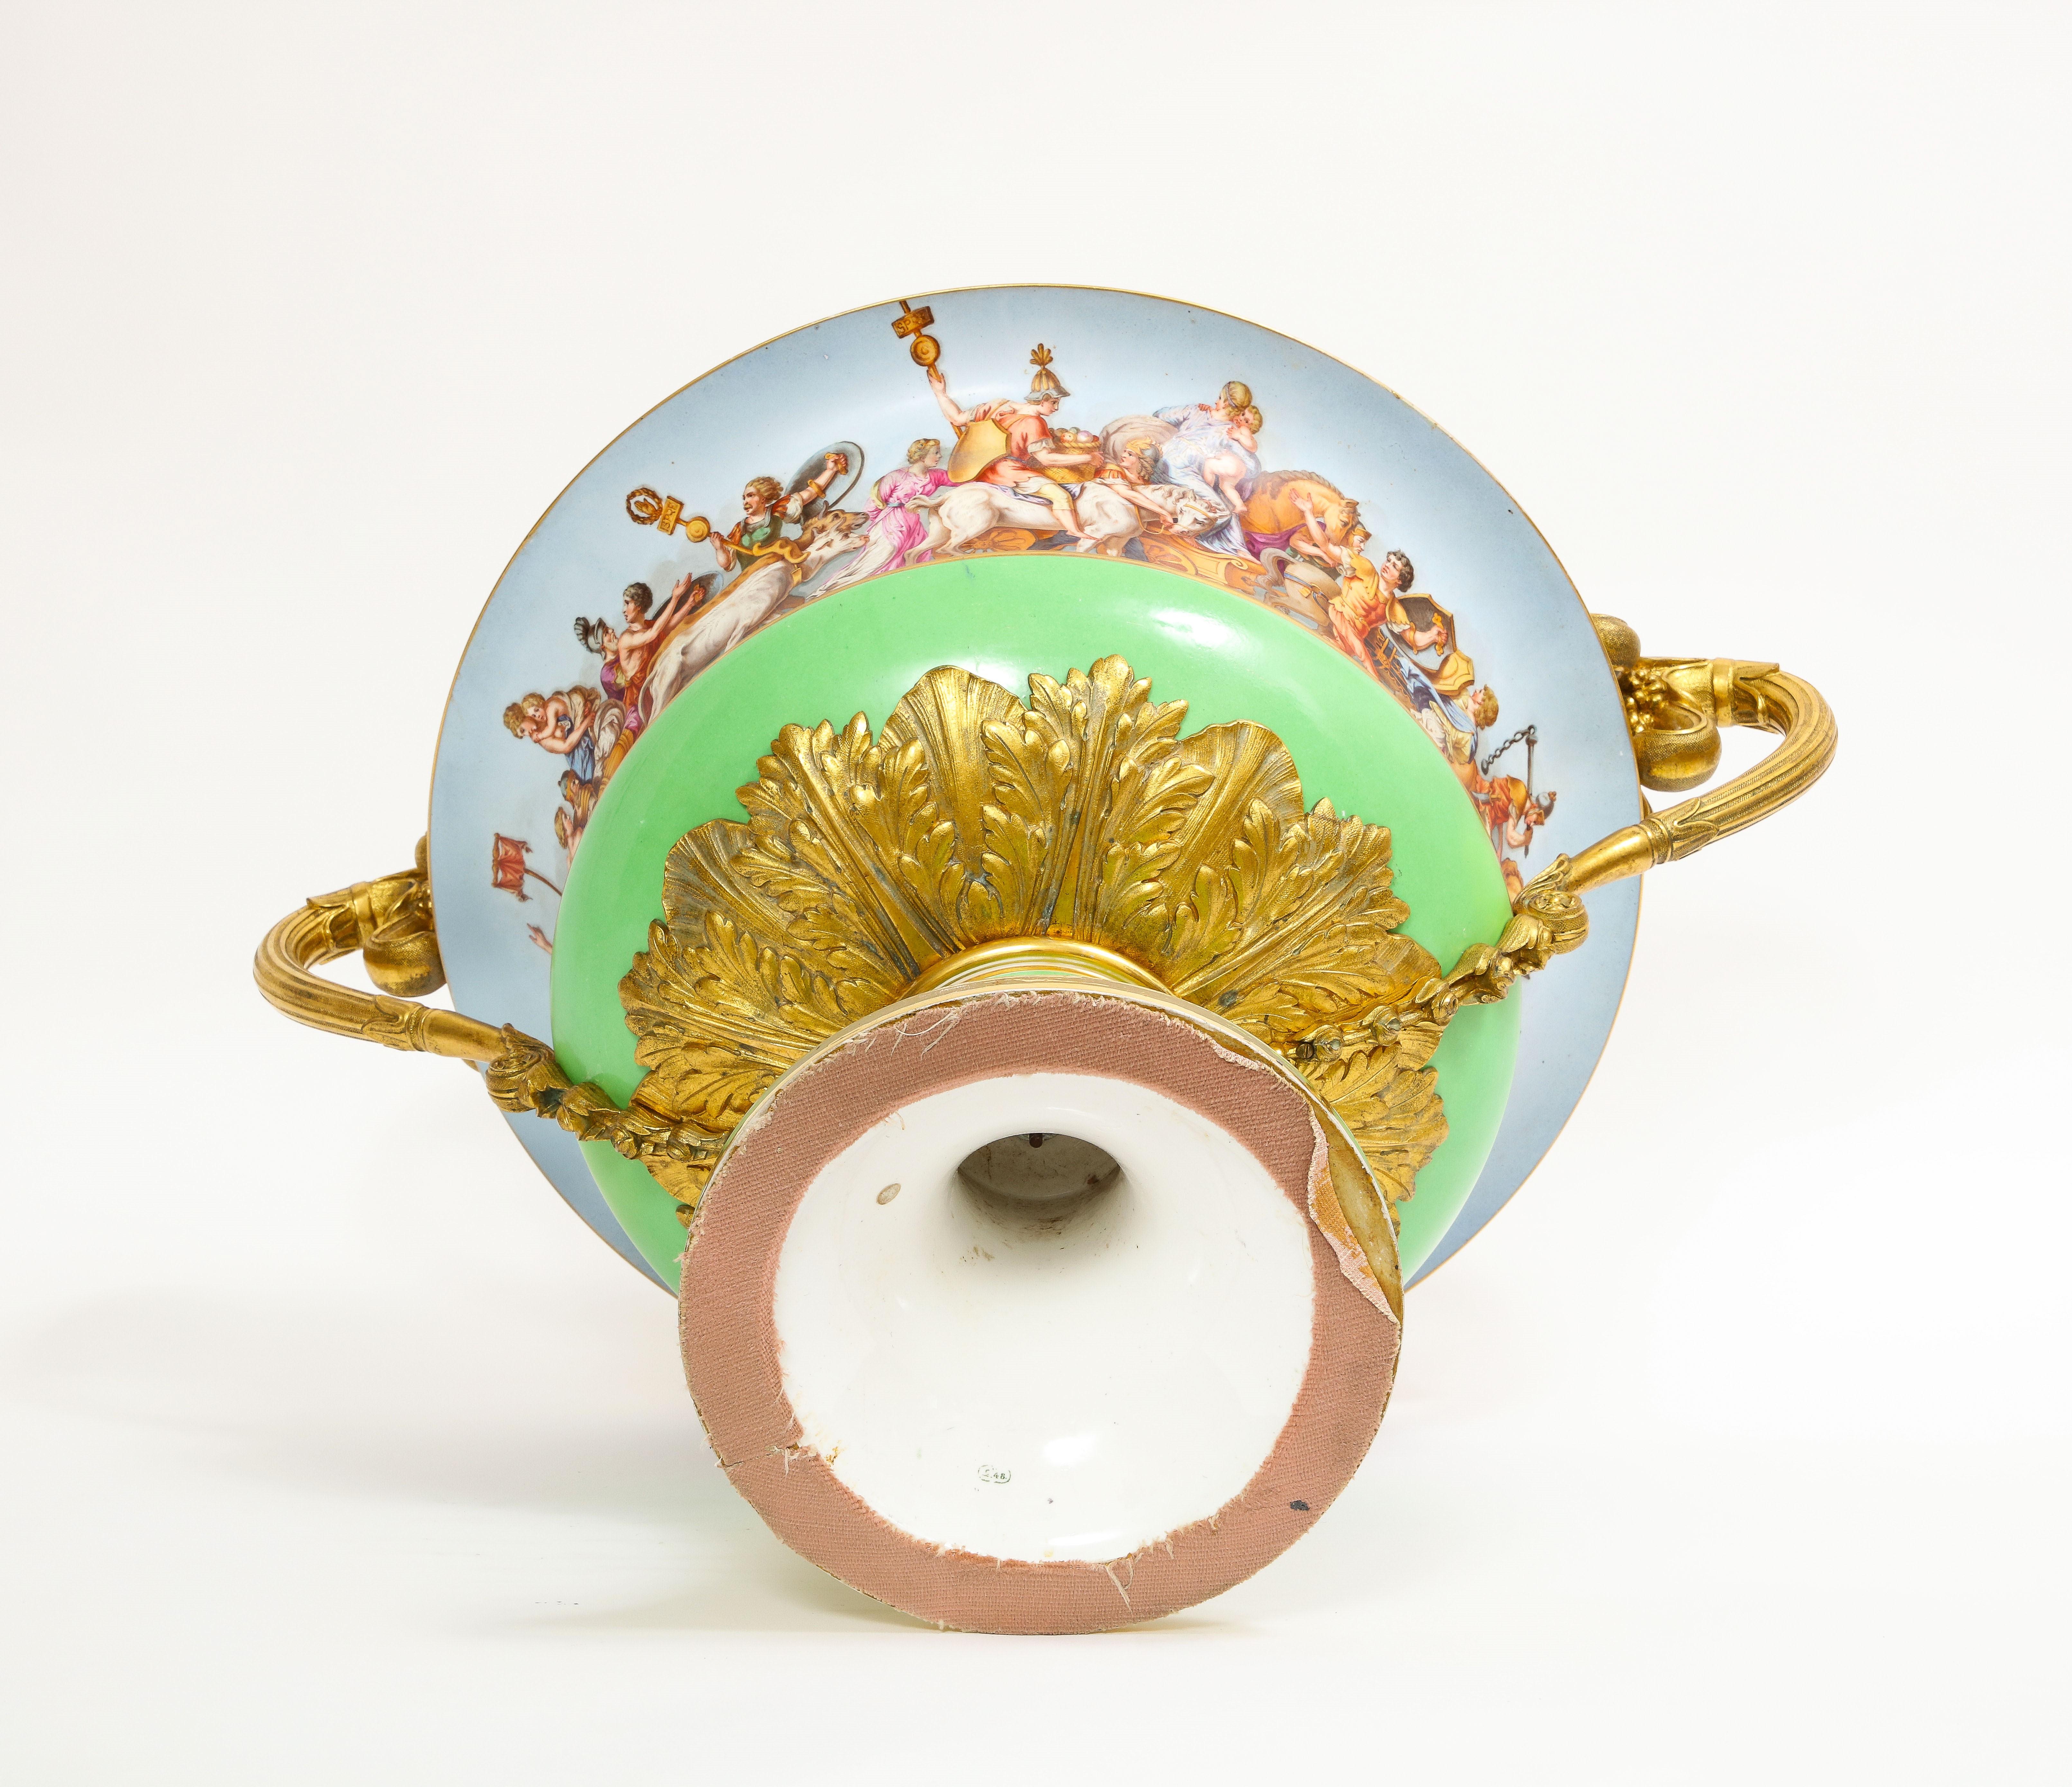 Monumental Sevres Porcelain Ormolu-Mounted 2-Handle Campana Form Centerpiece For Sale 12